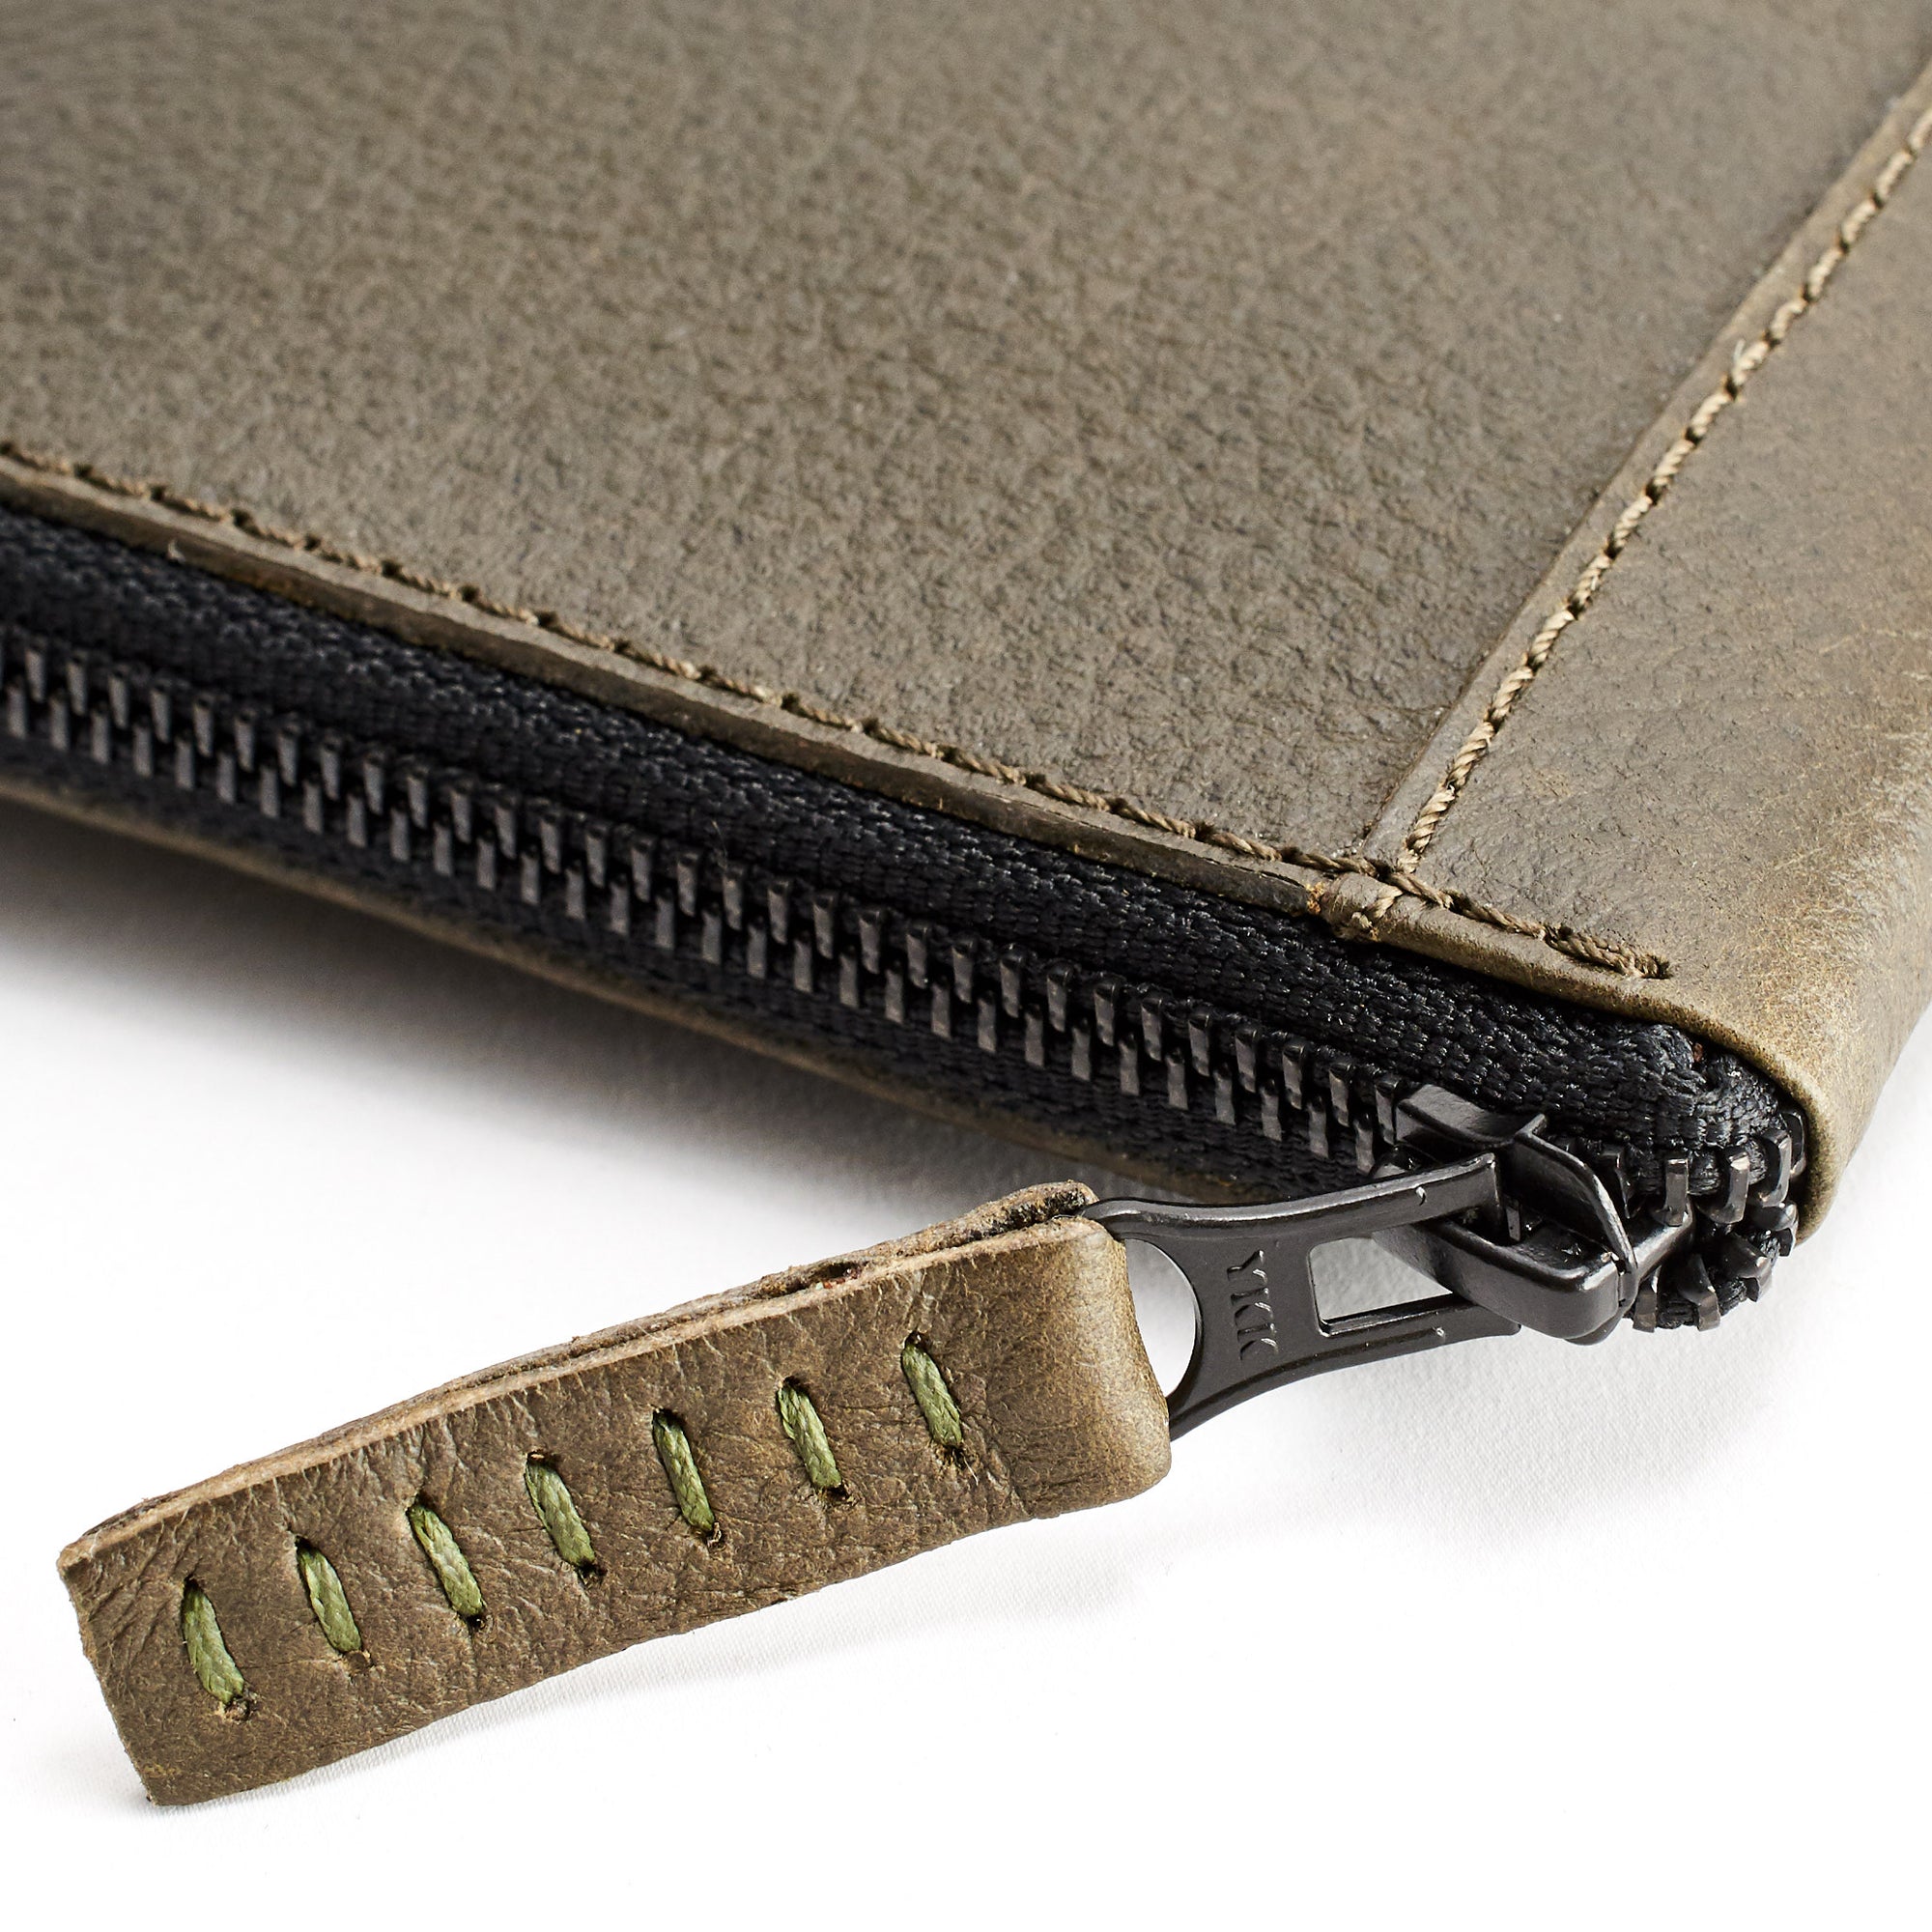 YKK zipper detail. Green Passport Holder for travelers, document organizer, travel journal by Capra Leather